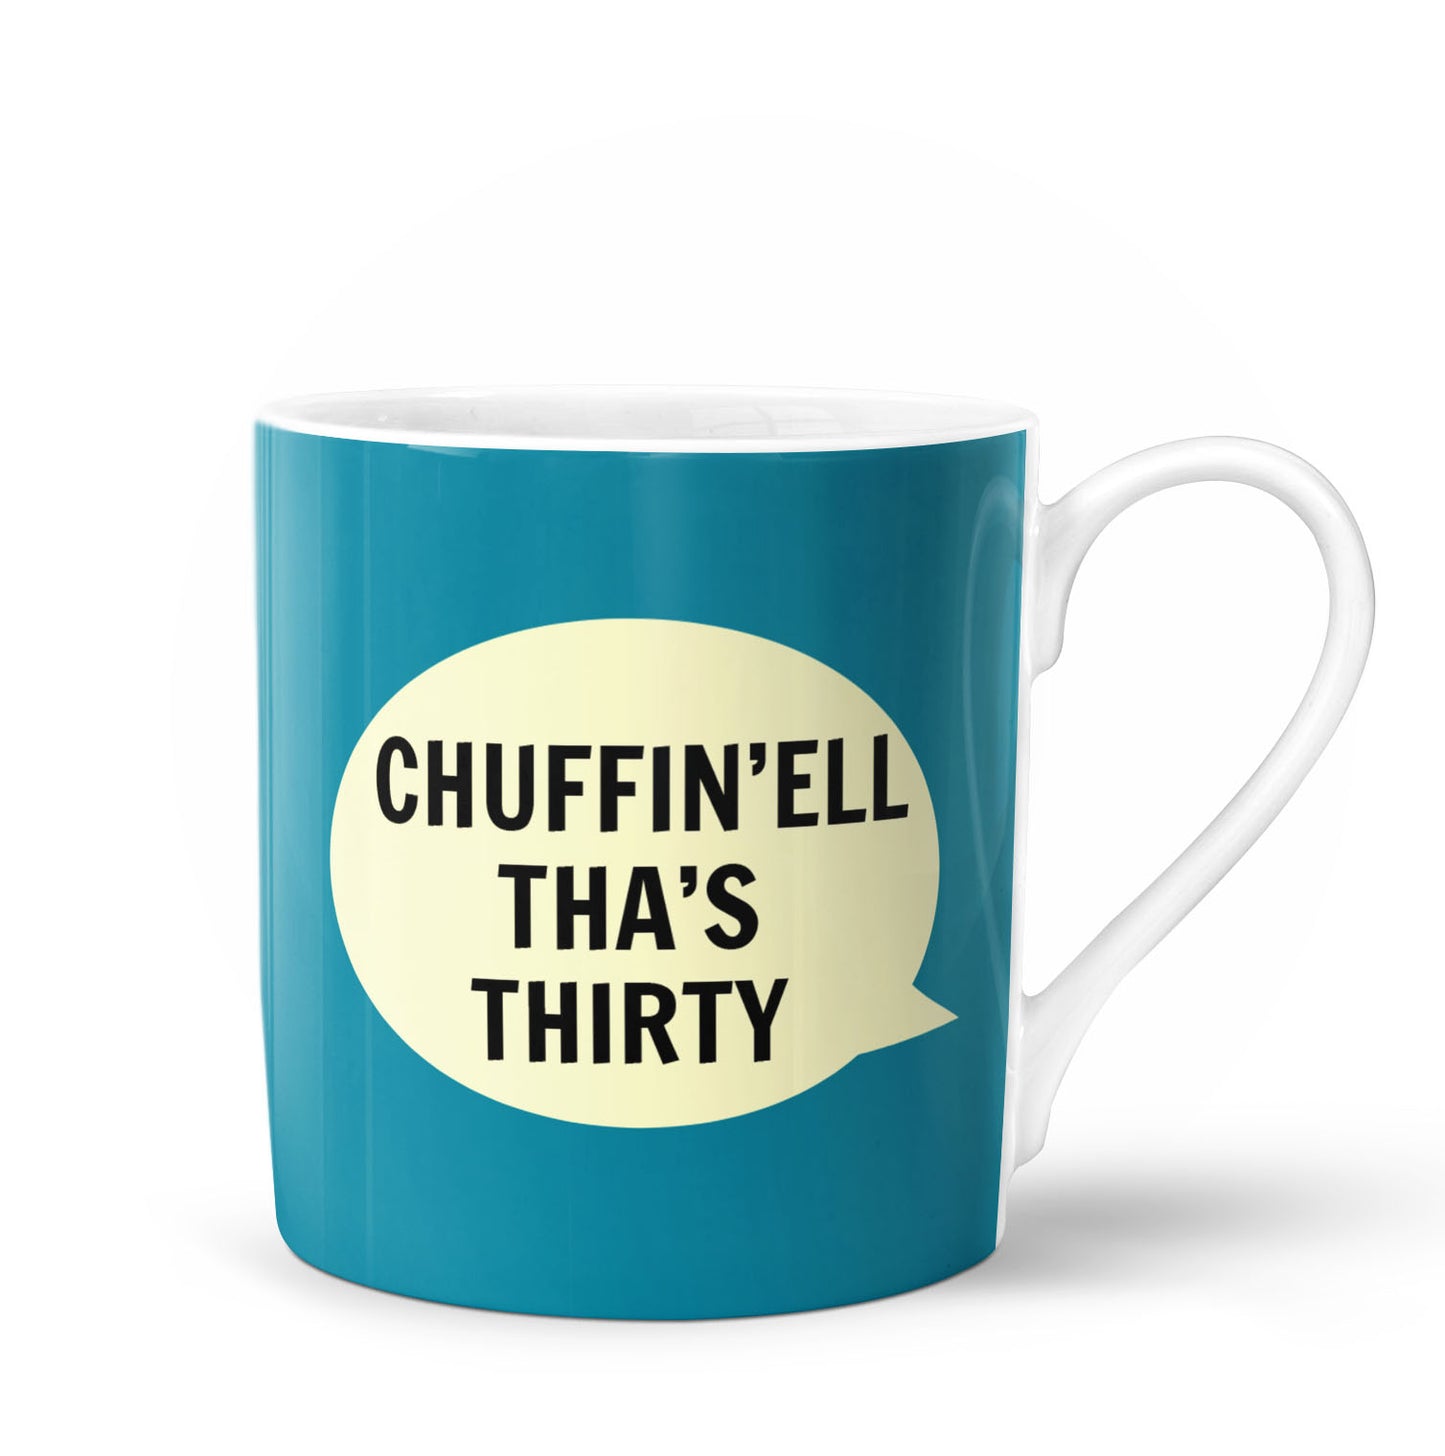 Chuffin'ell Tha's Thirty Bone China Mug - The Great Yorkshire Shop